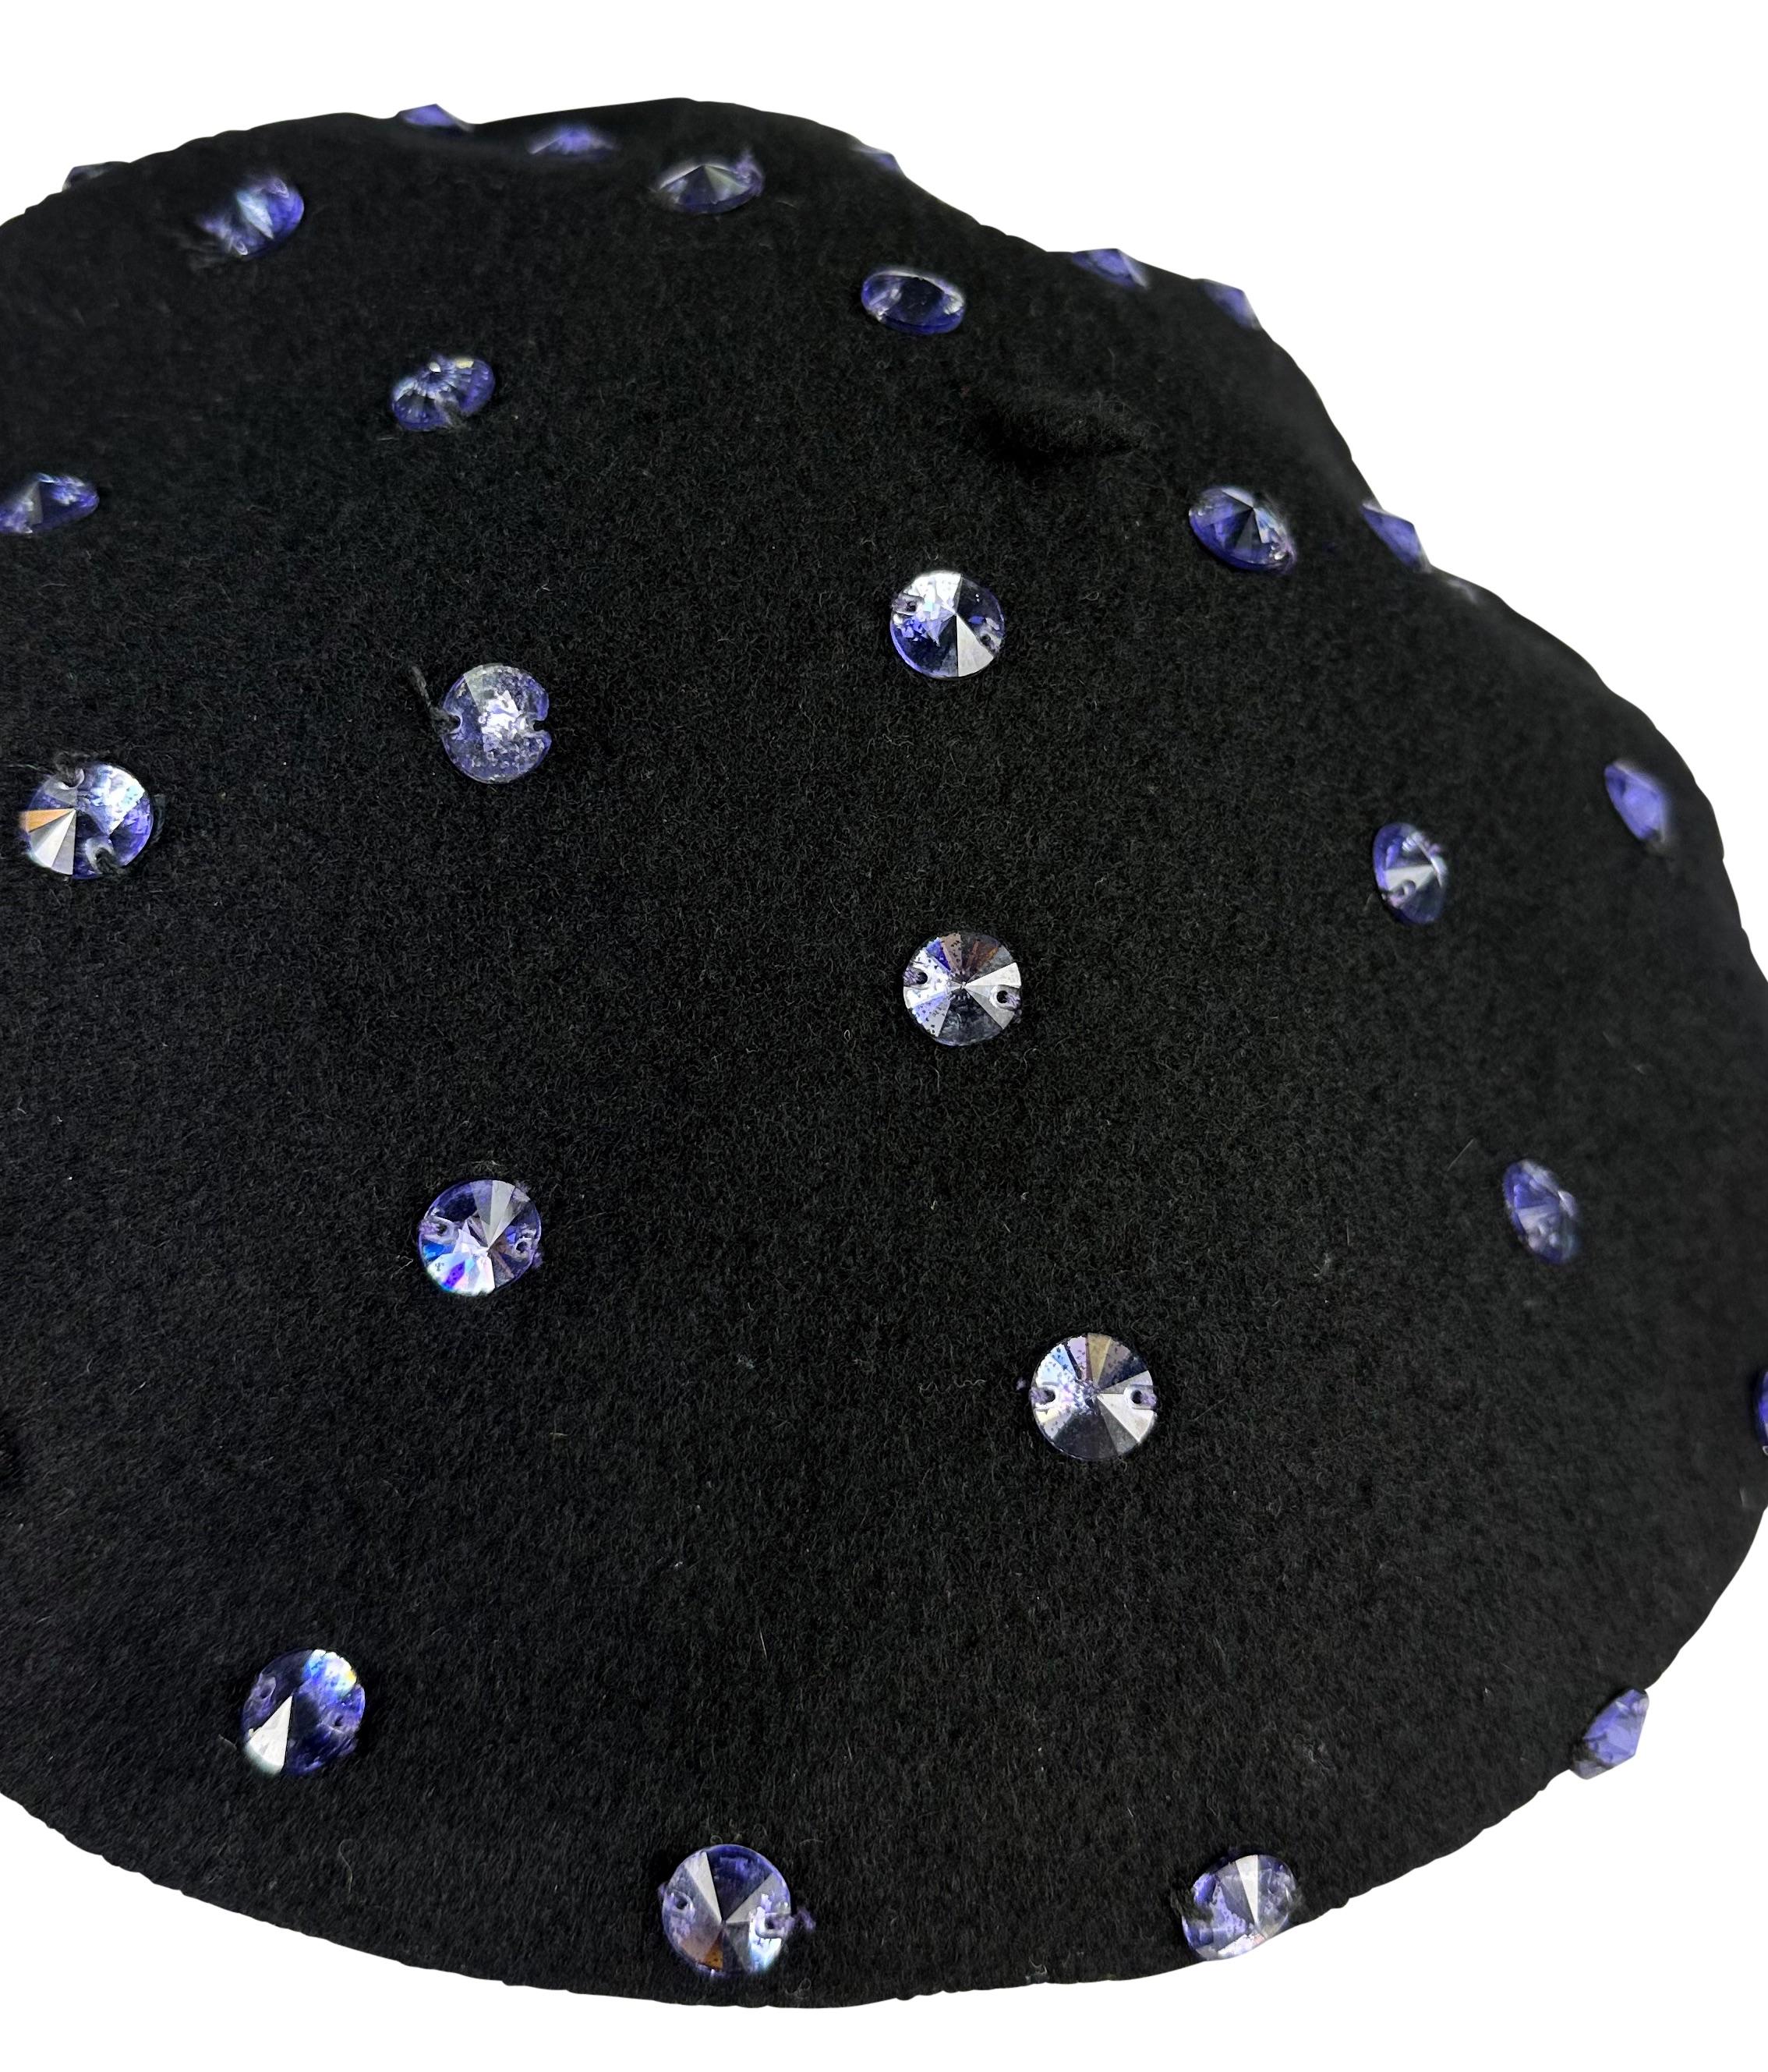 F/W 2000 Dolce & Gabbana Runway Ad Purple Rhinestone Black Beret Hat For Sale 2